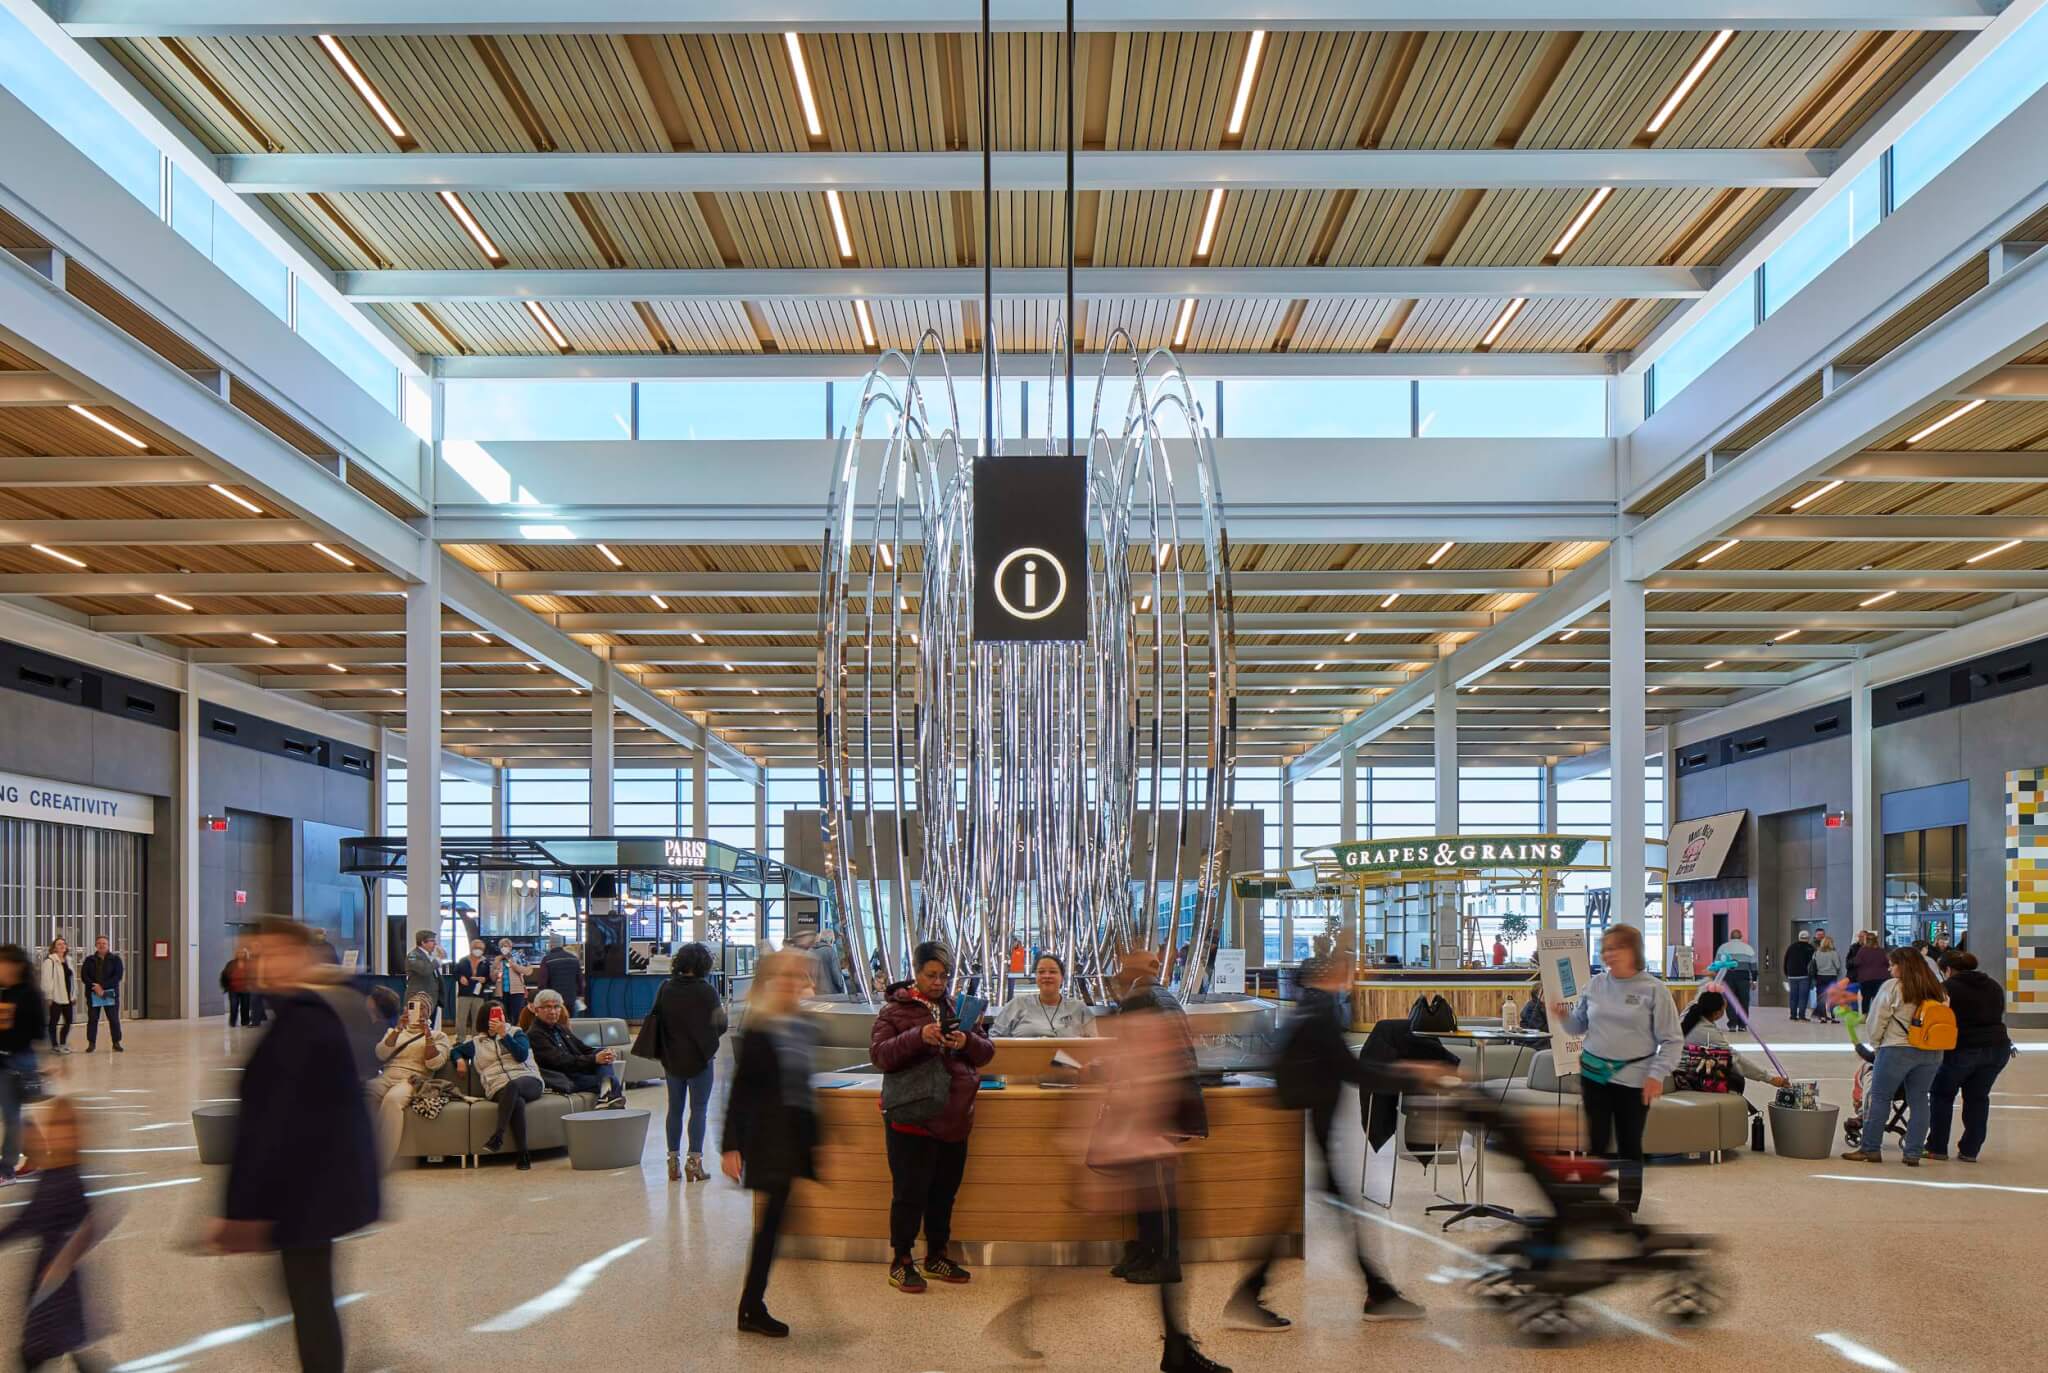 kansas city airport interior with art installation